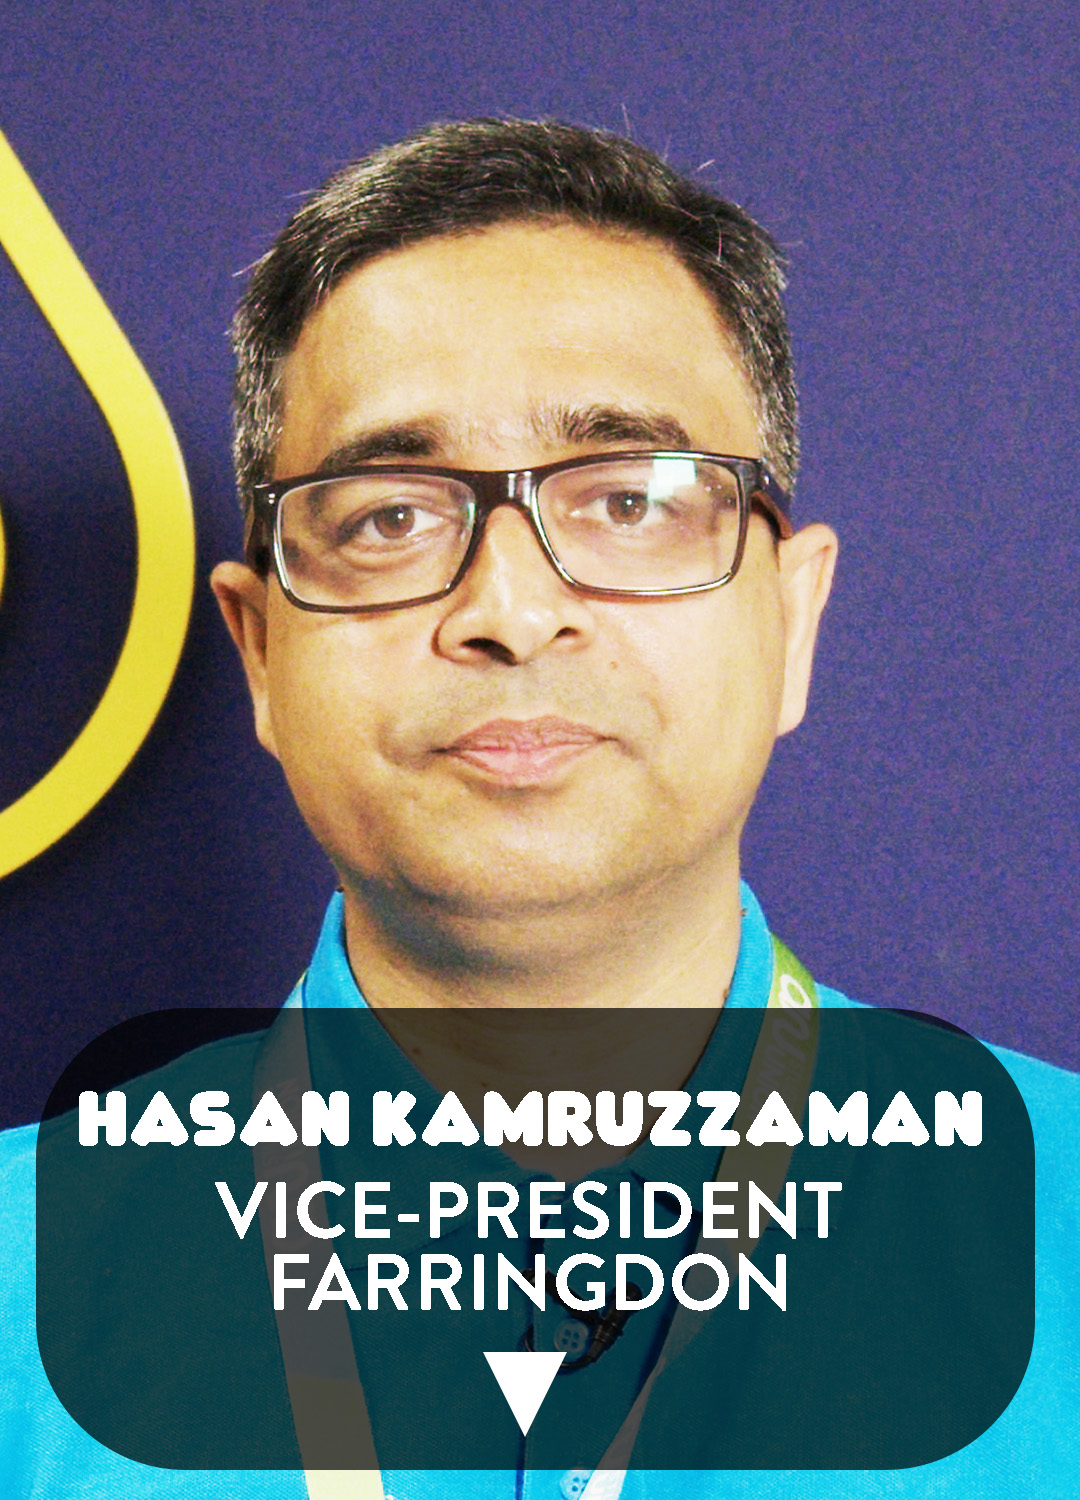 Hasan Kamruzzaman. Vice President Farringdon.